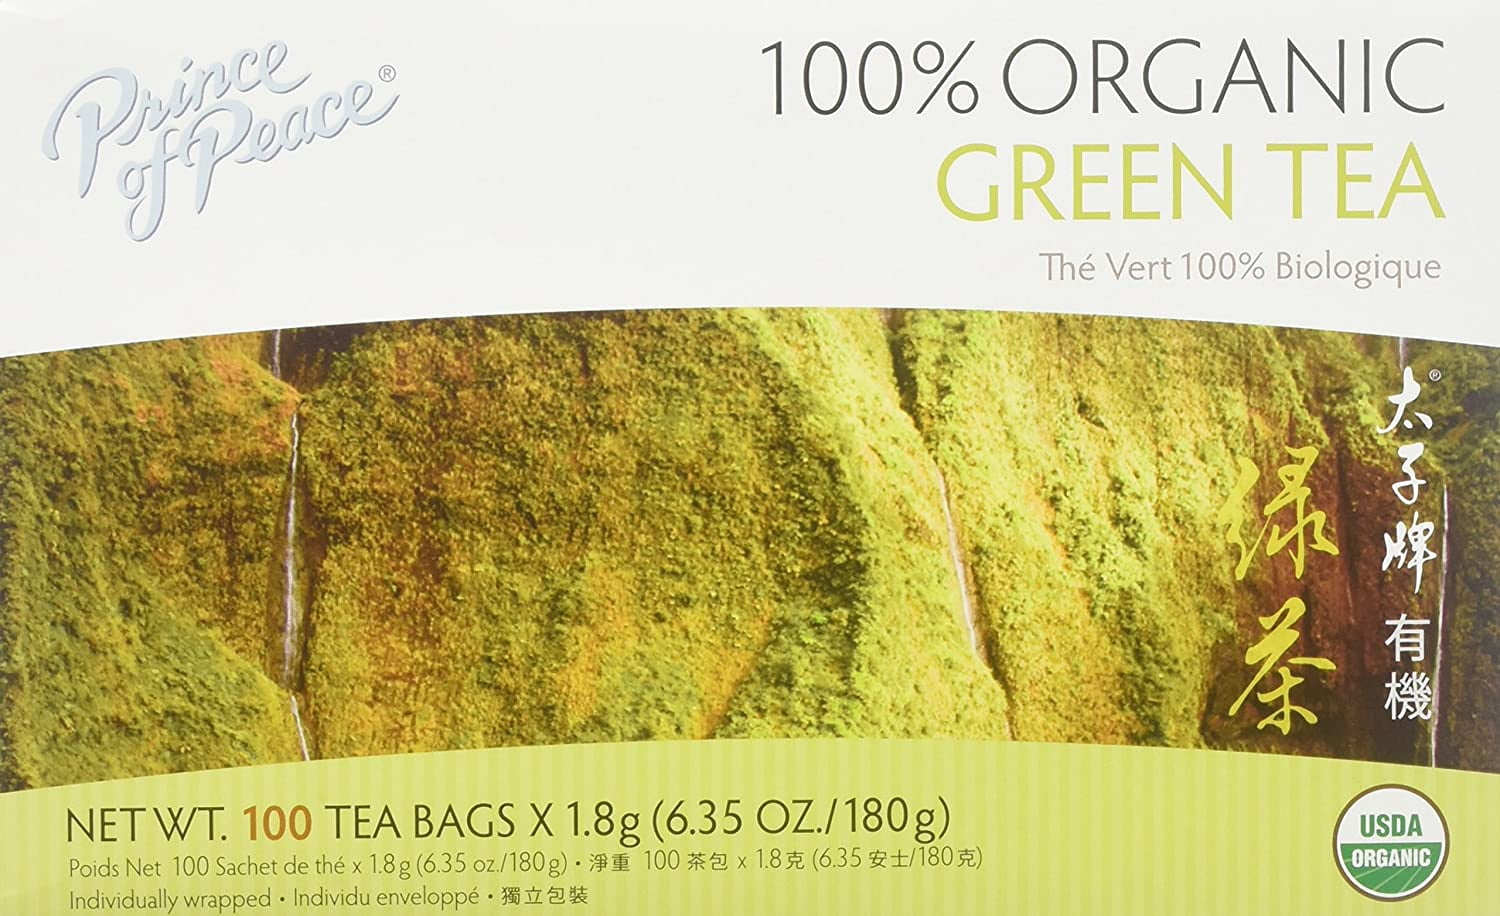 Celestial Seasonings Green Tea, Immune Support Antioxidants, 4 Ct Tea Bags  - Walmart.com